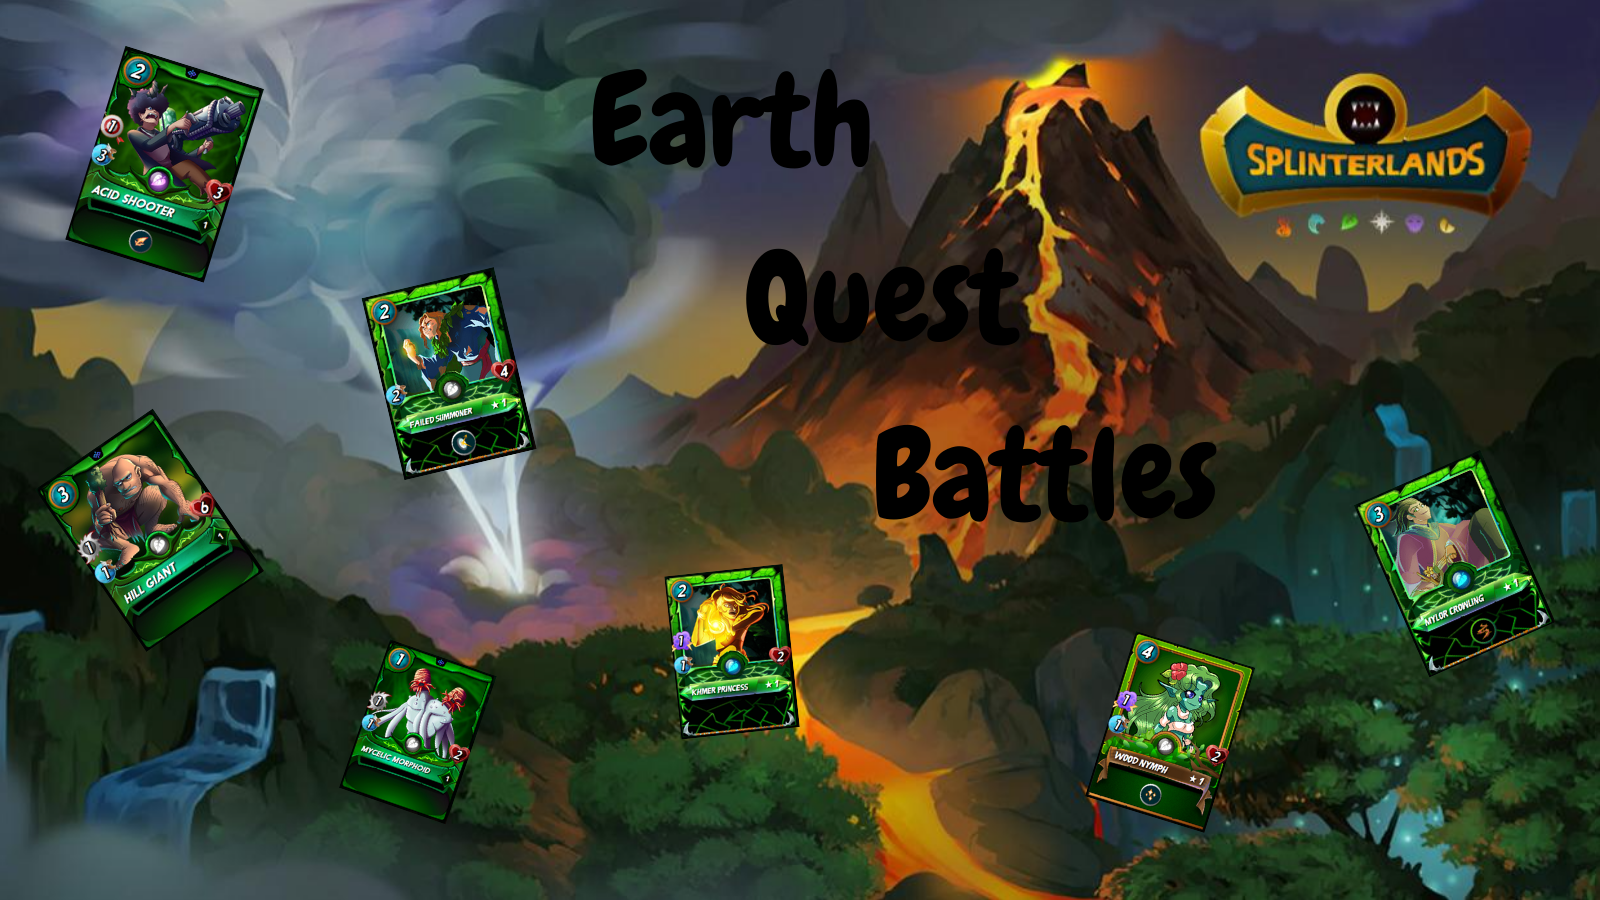 Earth Quest Battles.png